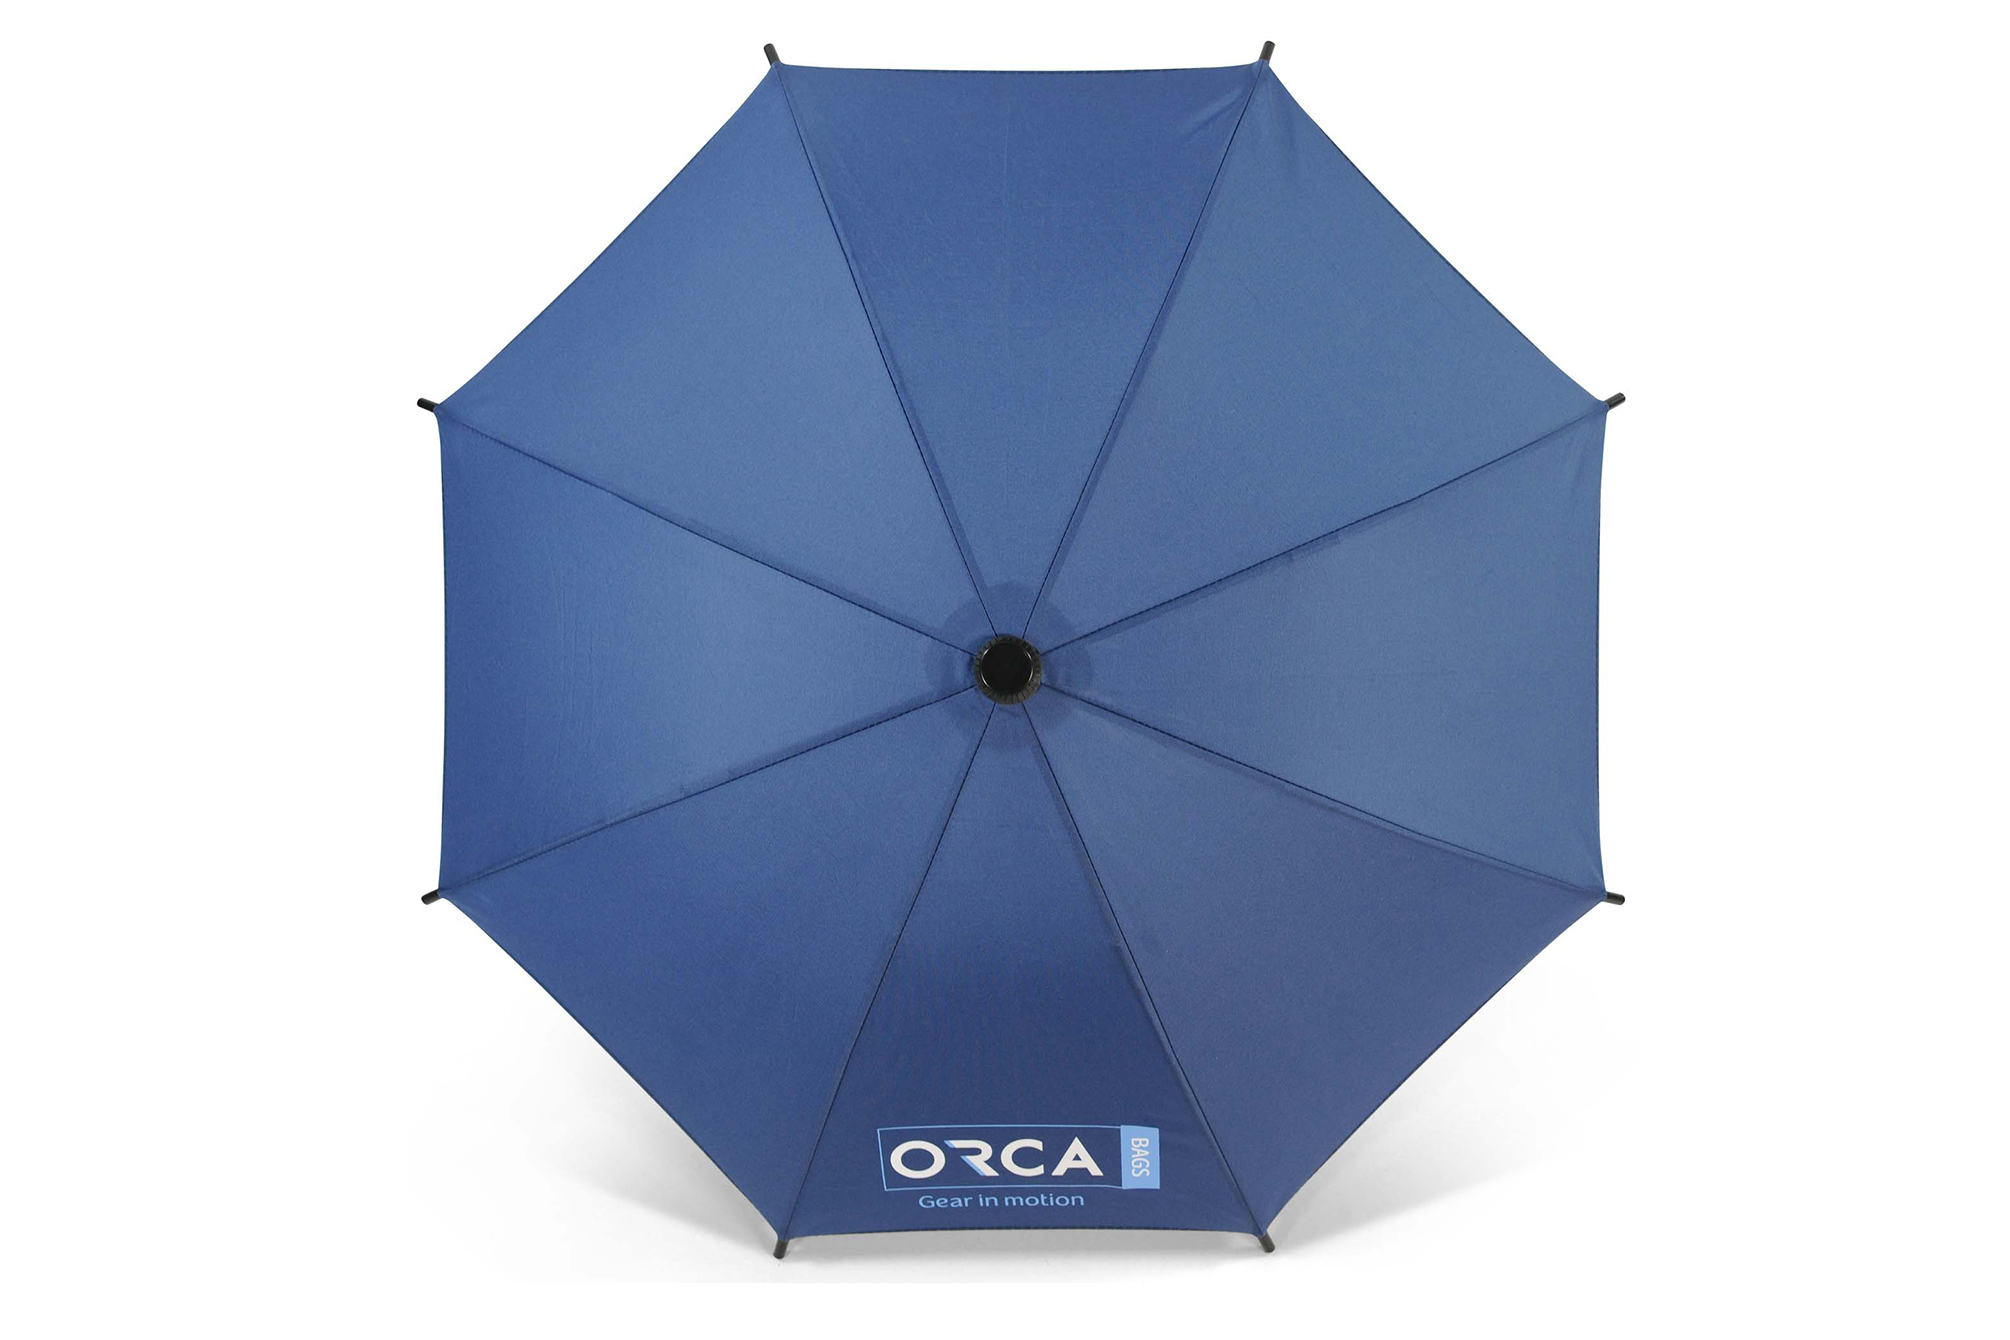 Orca OR-111 Small Production Umbrella for Video / DSLR Cameras